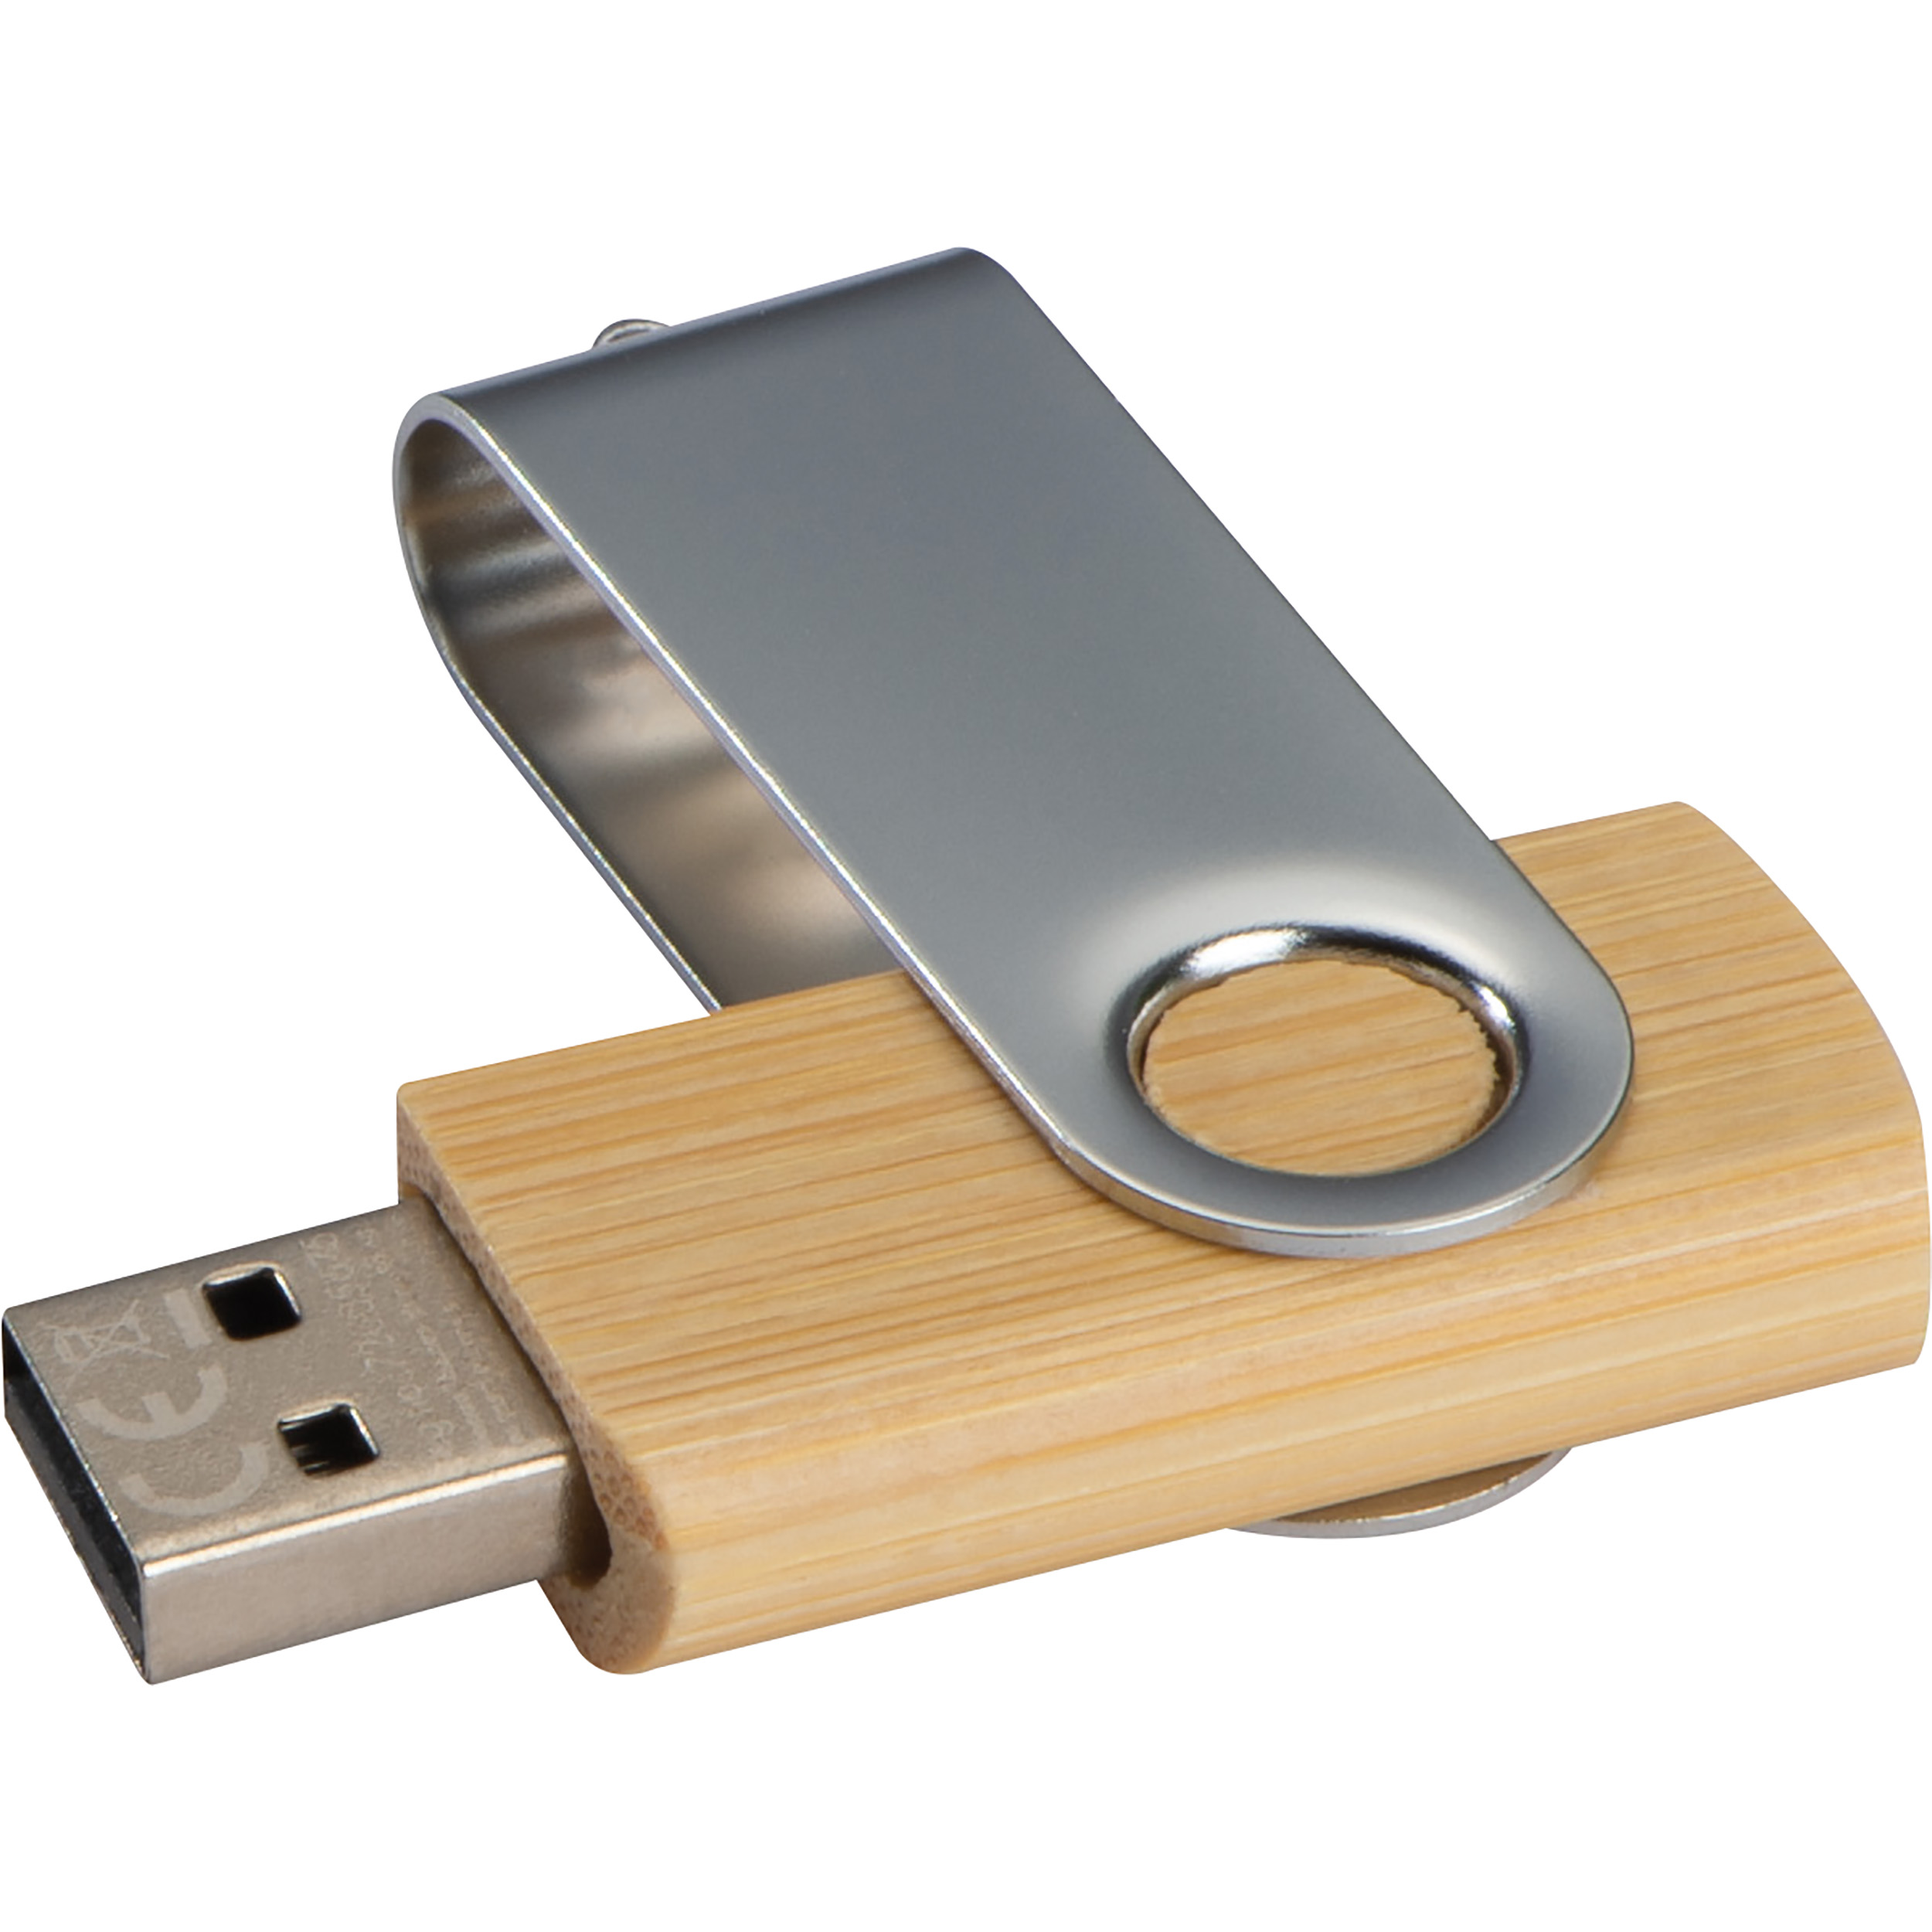 BambooClip USB - Claix - Zaprinta France